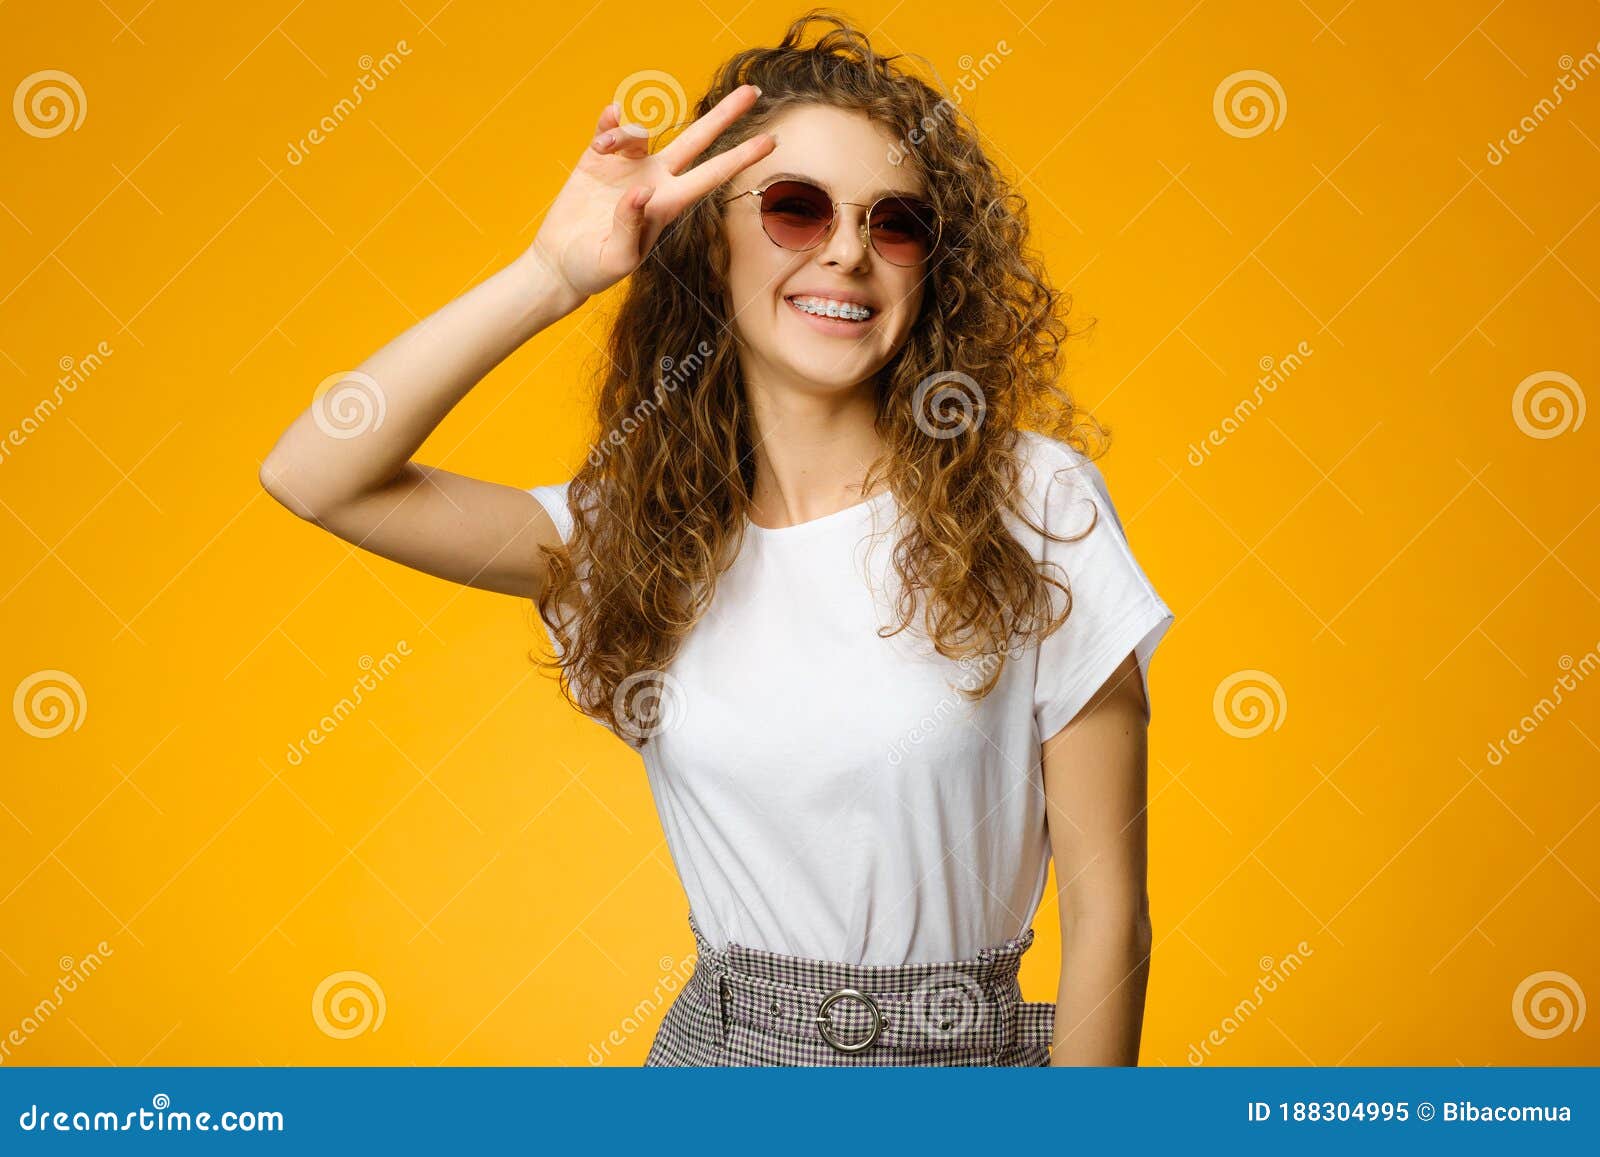 Teen Braces Sunglasses Stock Photos - Free & Royalty-Free Stock